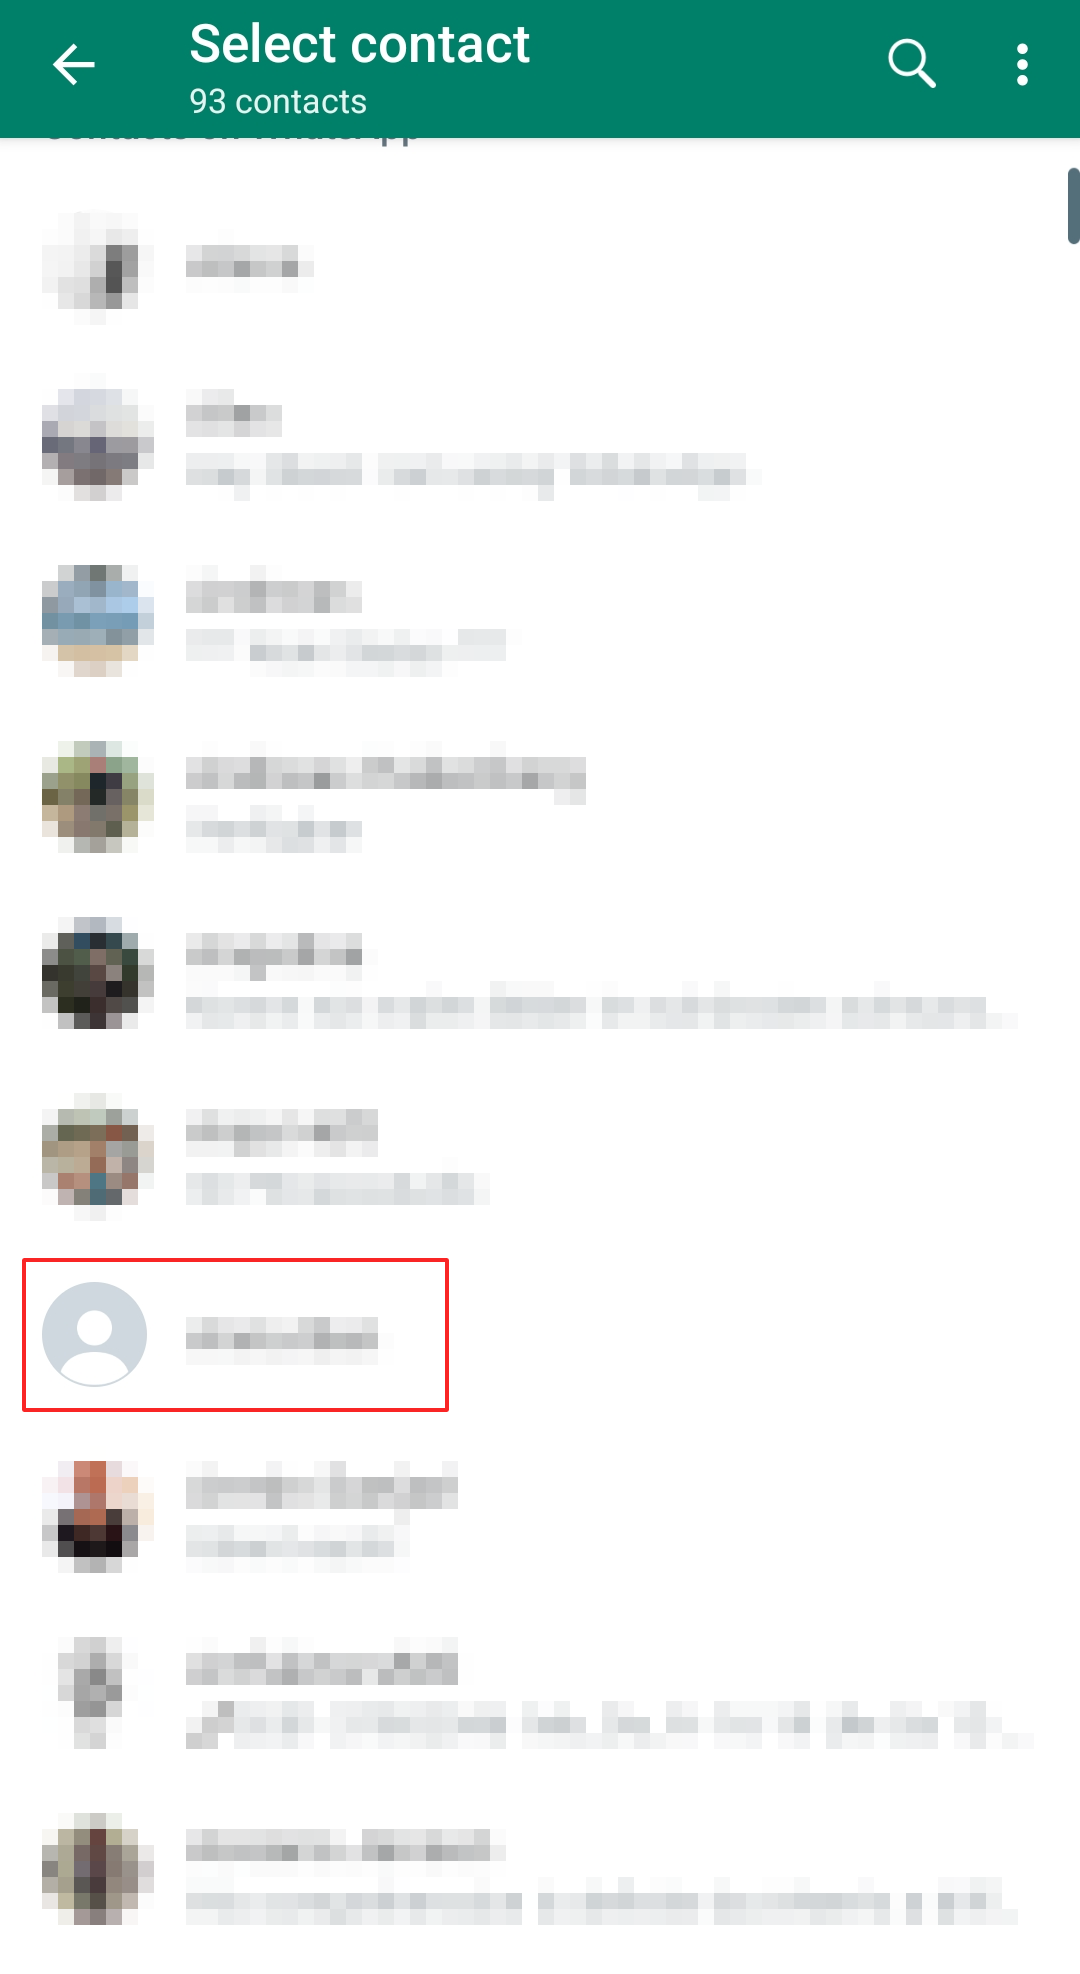 Captura de pantalla de una lista de contactos de WhatsApp